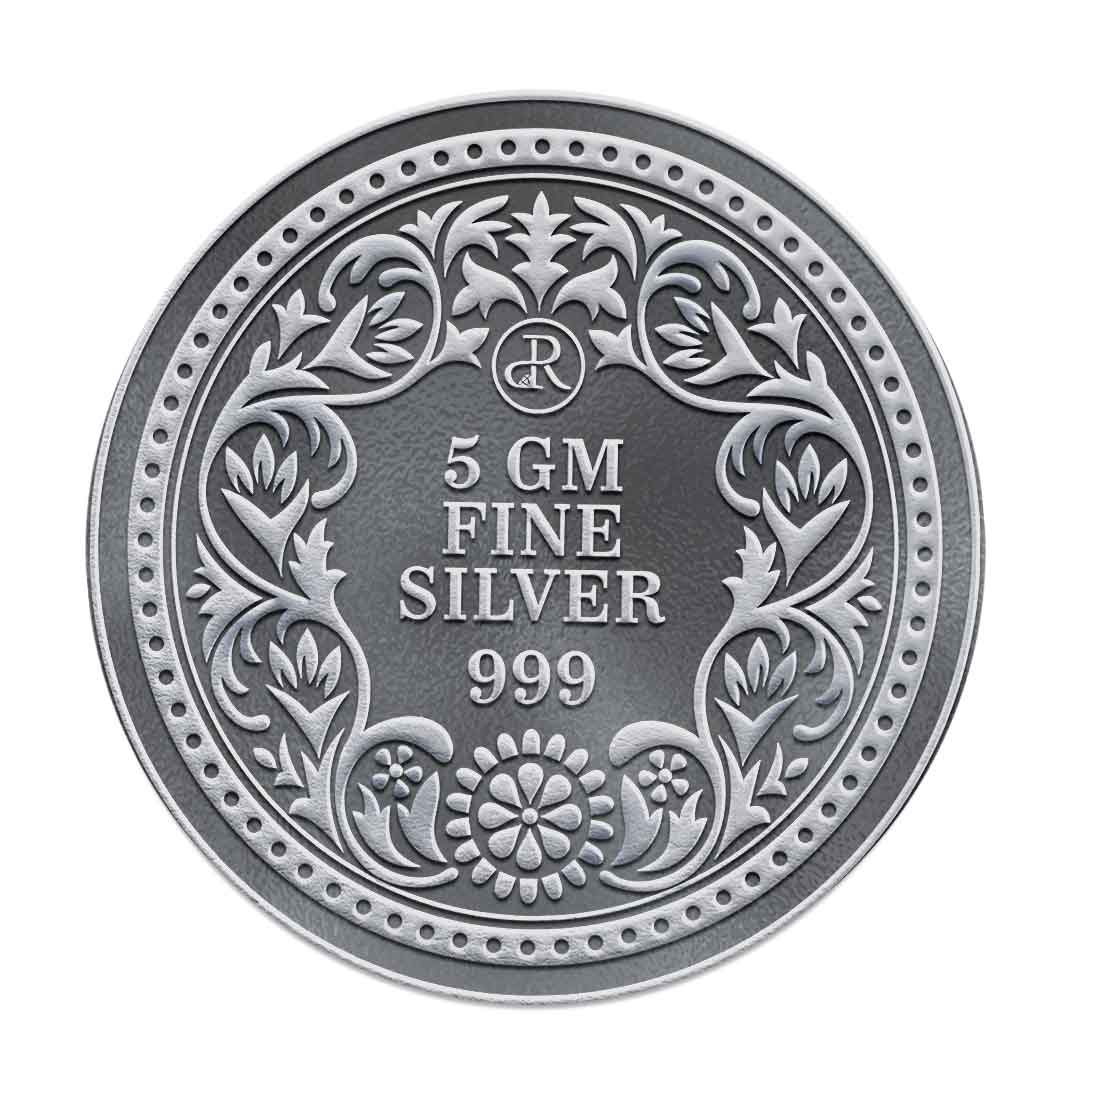 5 Gram Fine Silver 999 Coin